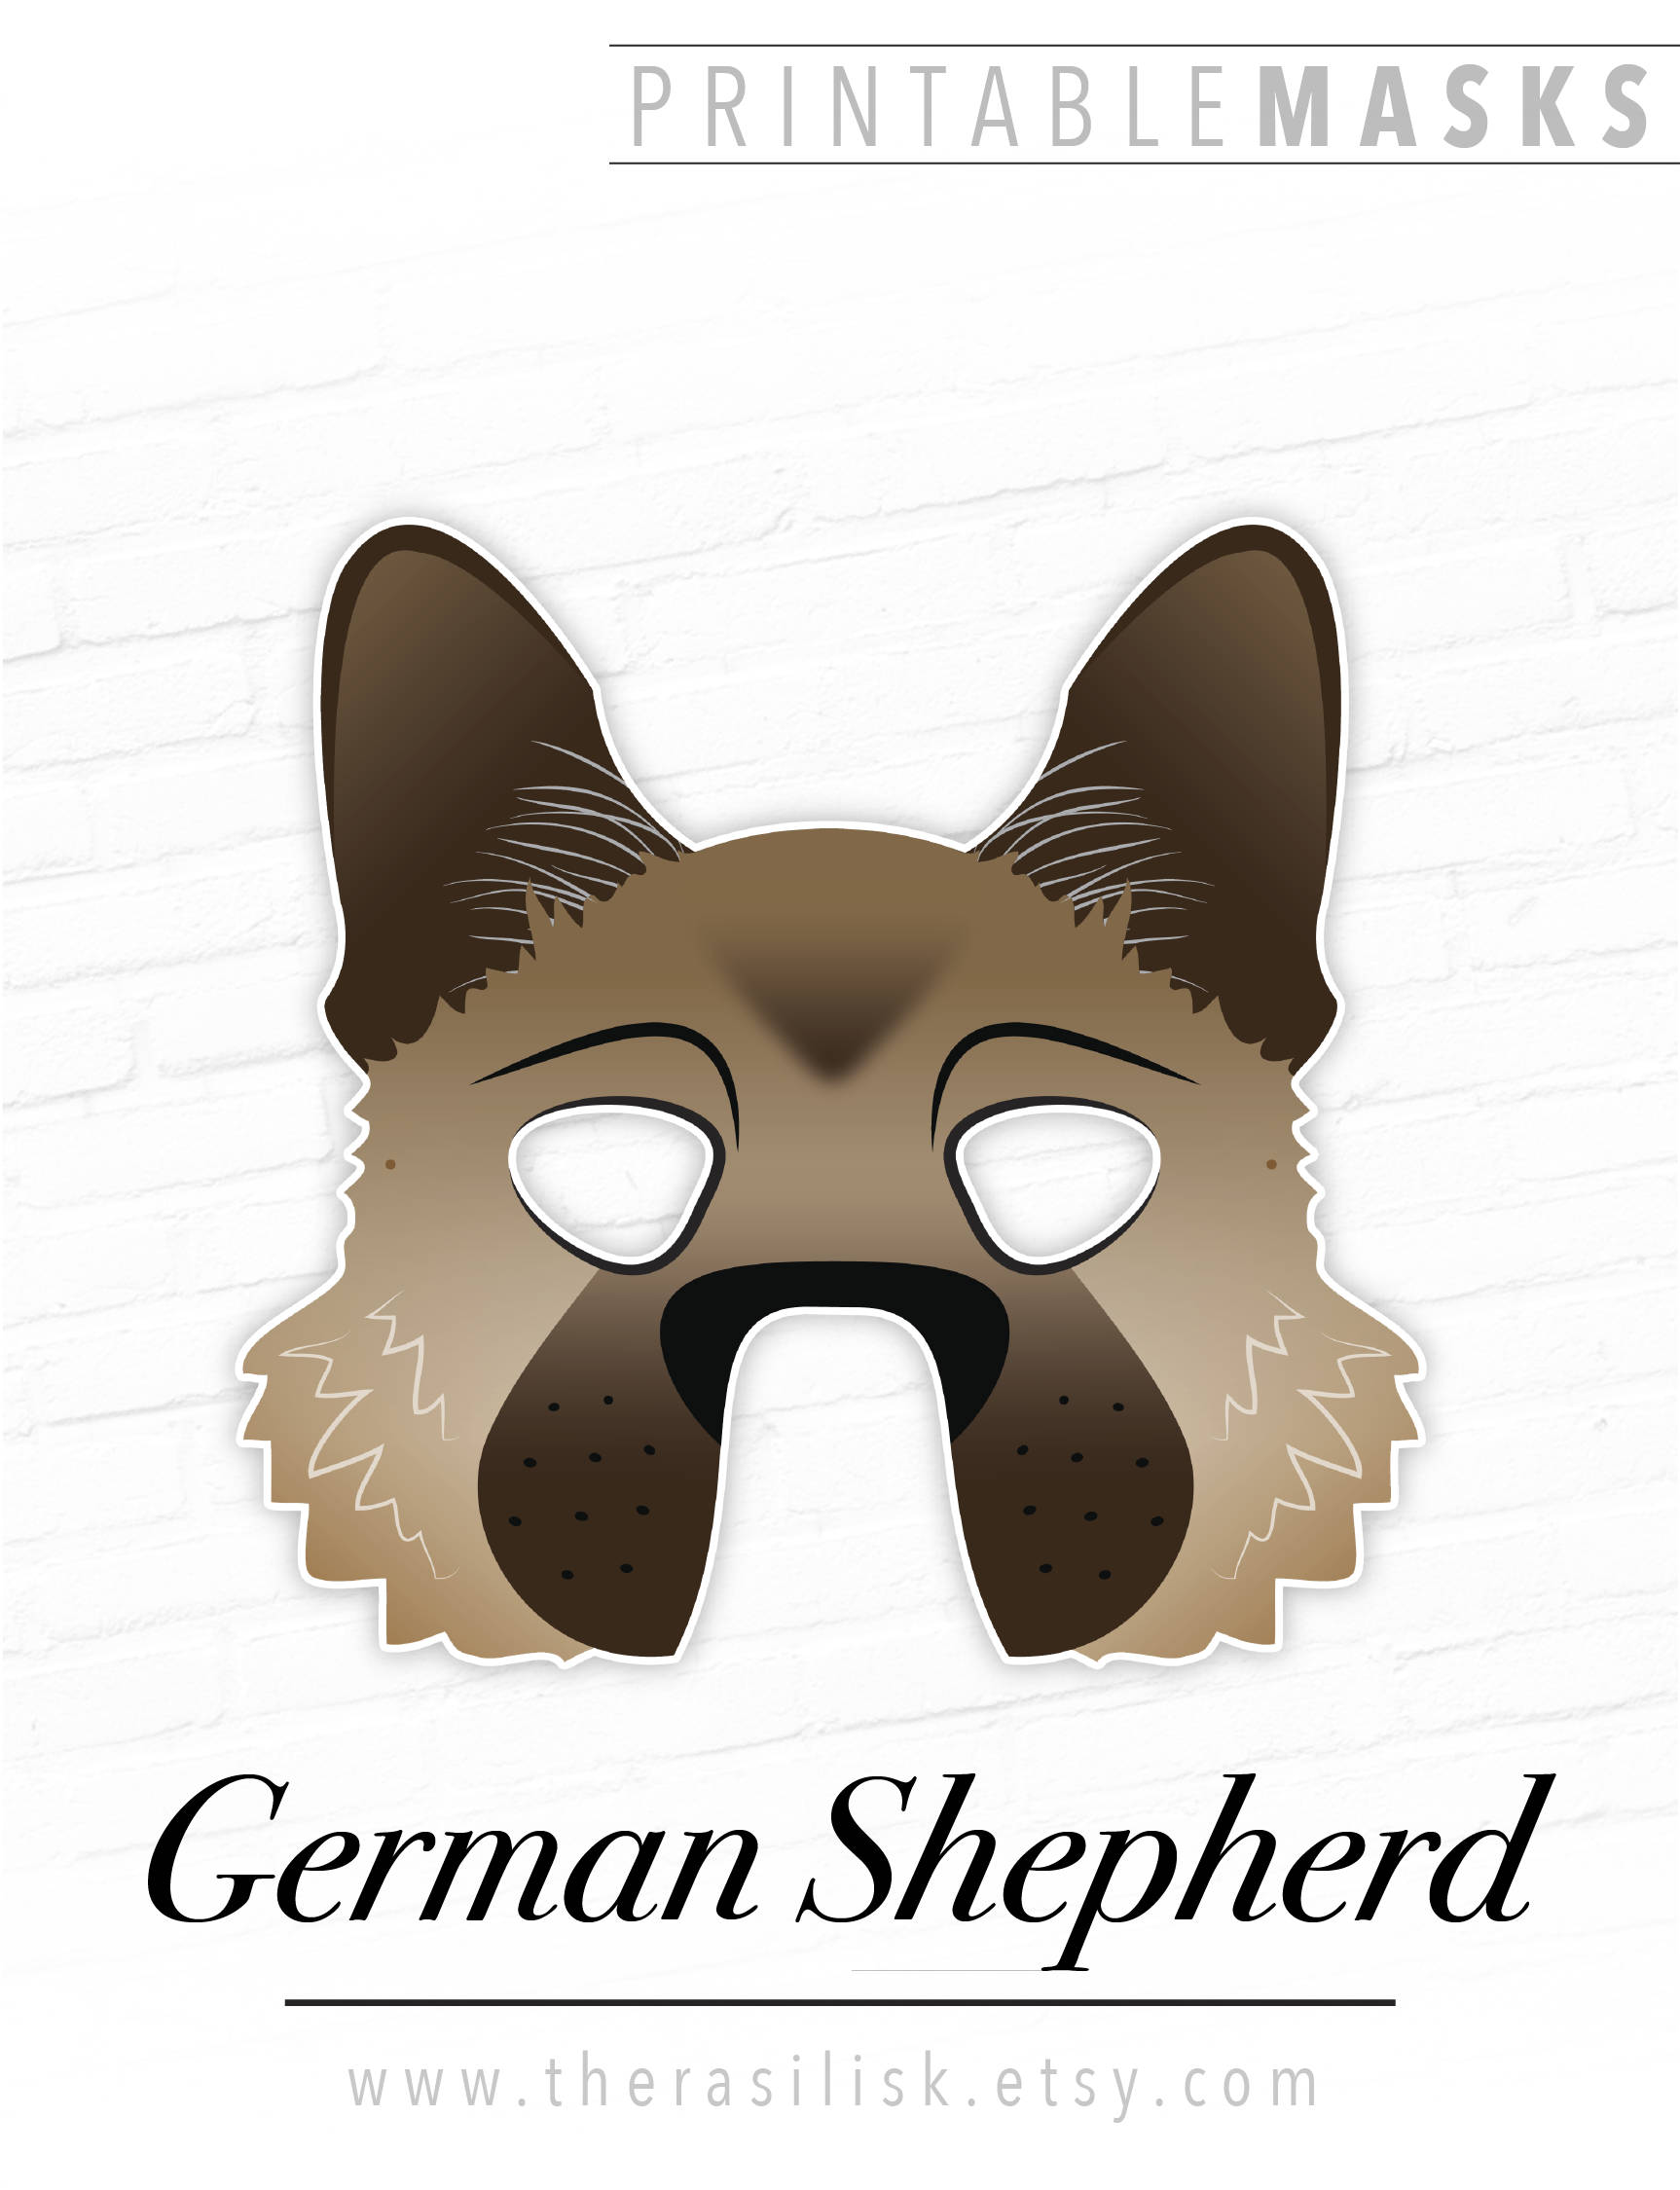 German Shepherd Printable Mask Malinois Dog Mask Halloween